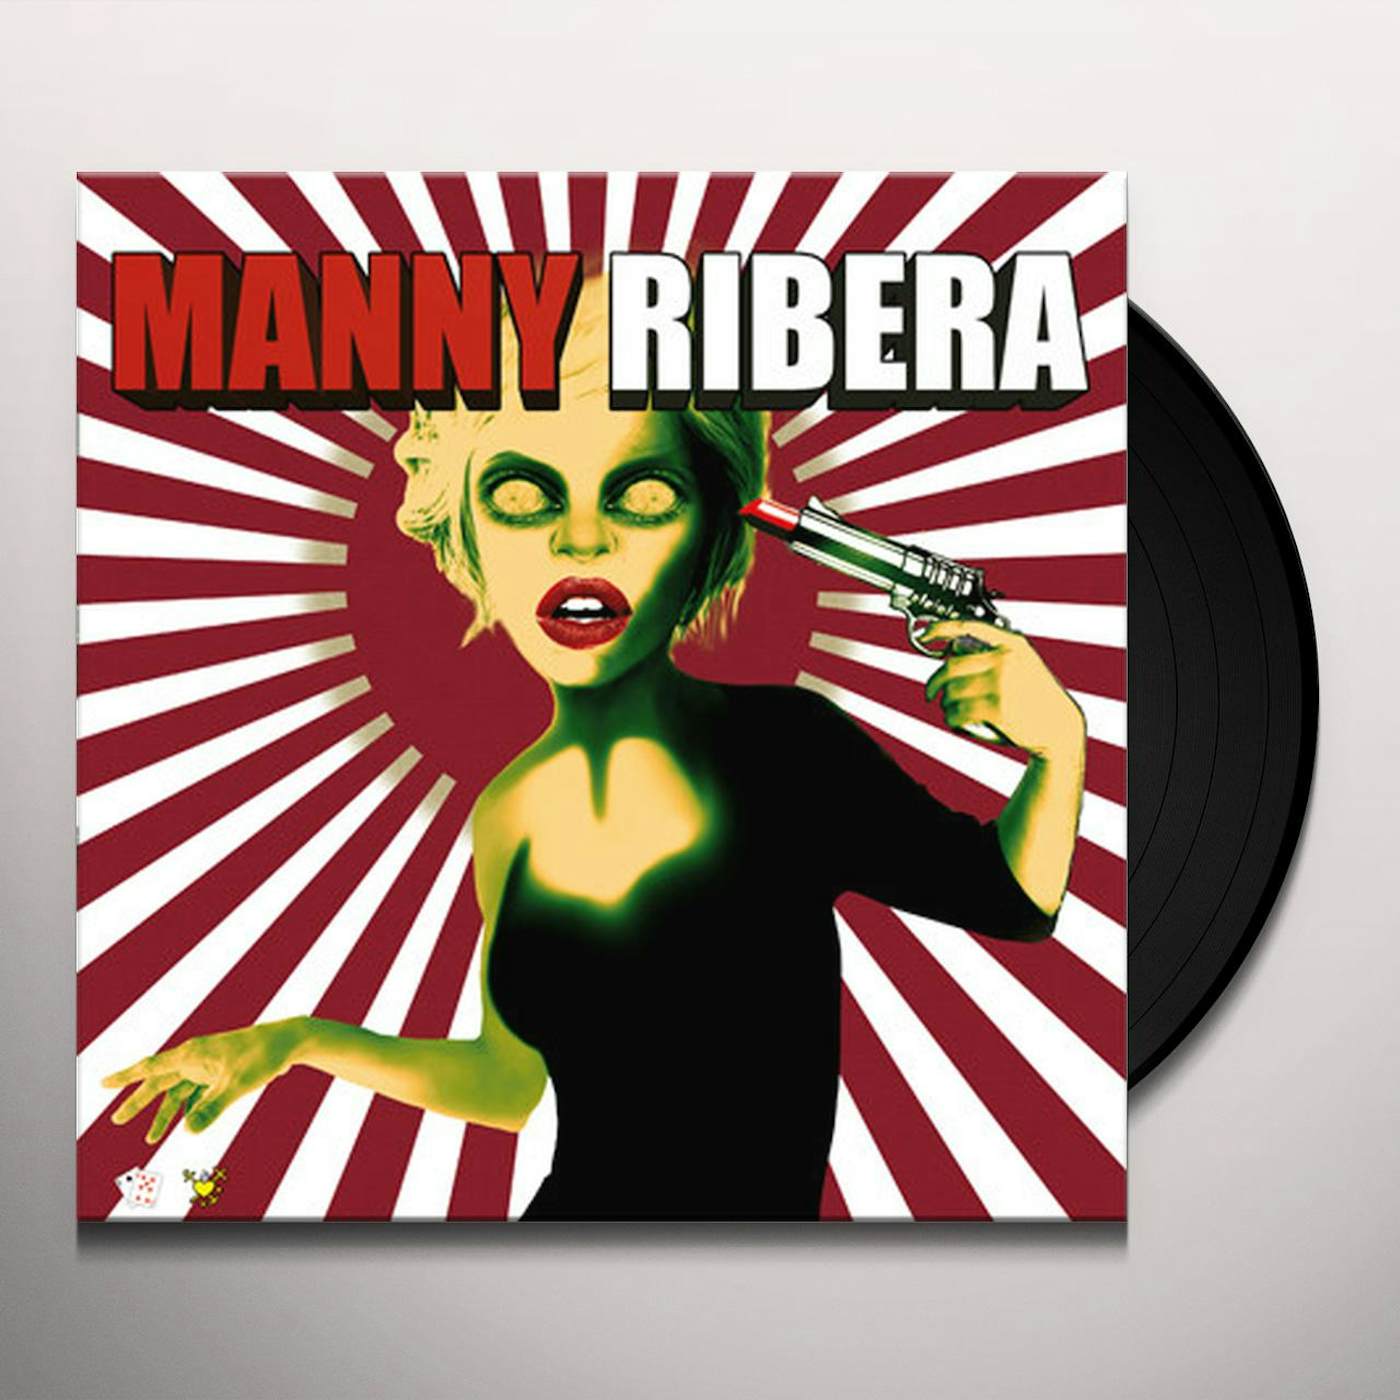 Manny Ribera Vinyl Record